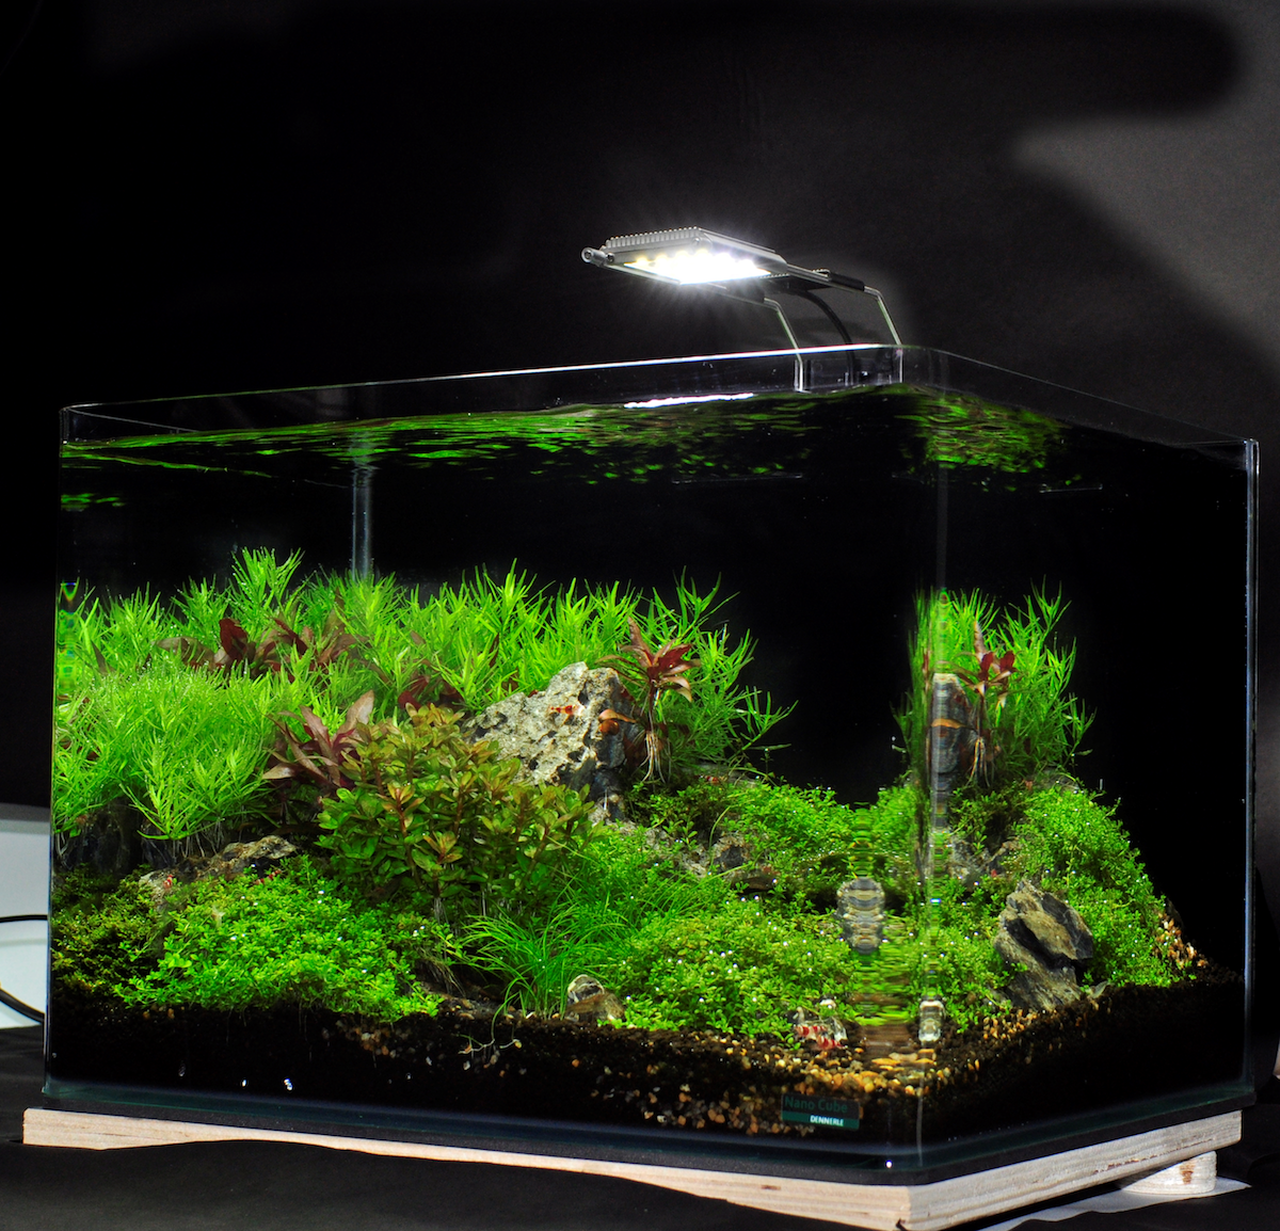 Aquascape Tank Kit with Plants